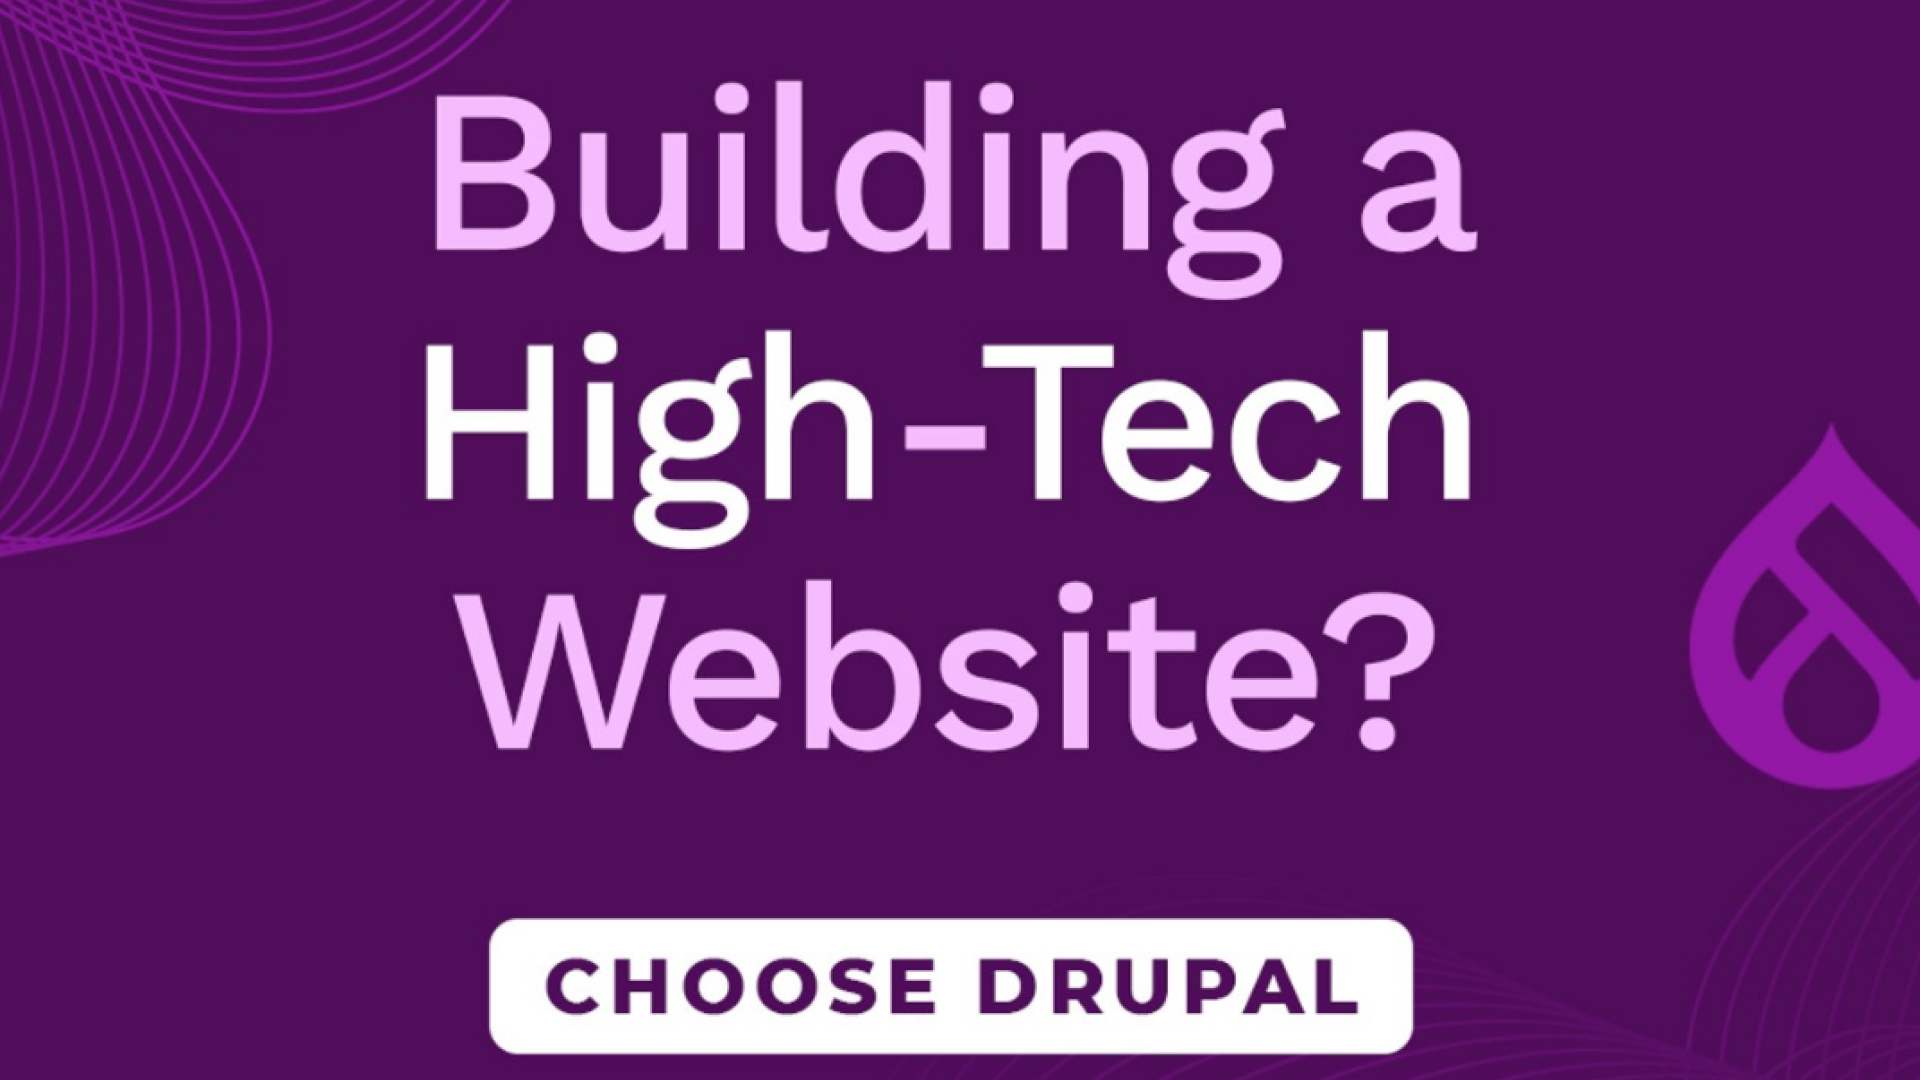 Building as High-Tech Website? Choose Drupal